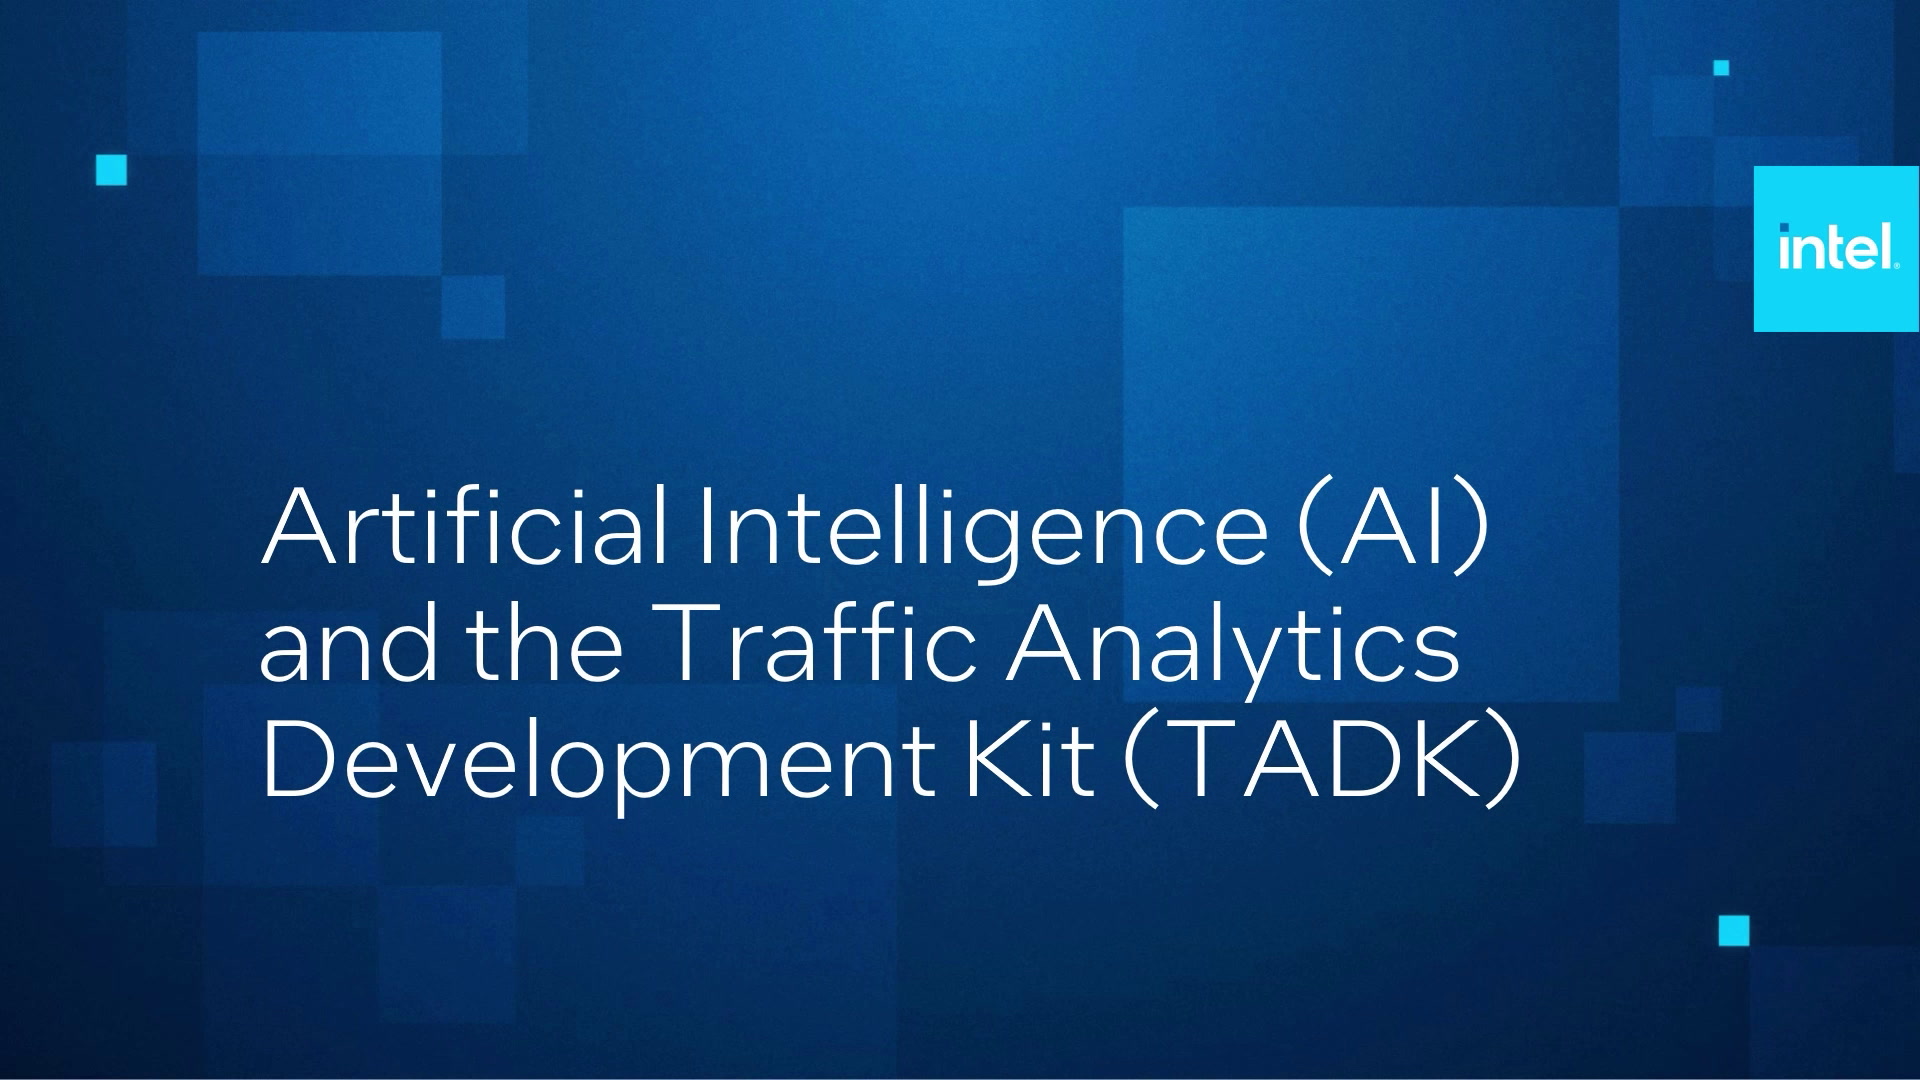 Traffic Analytics Development Kit (TADK)